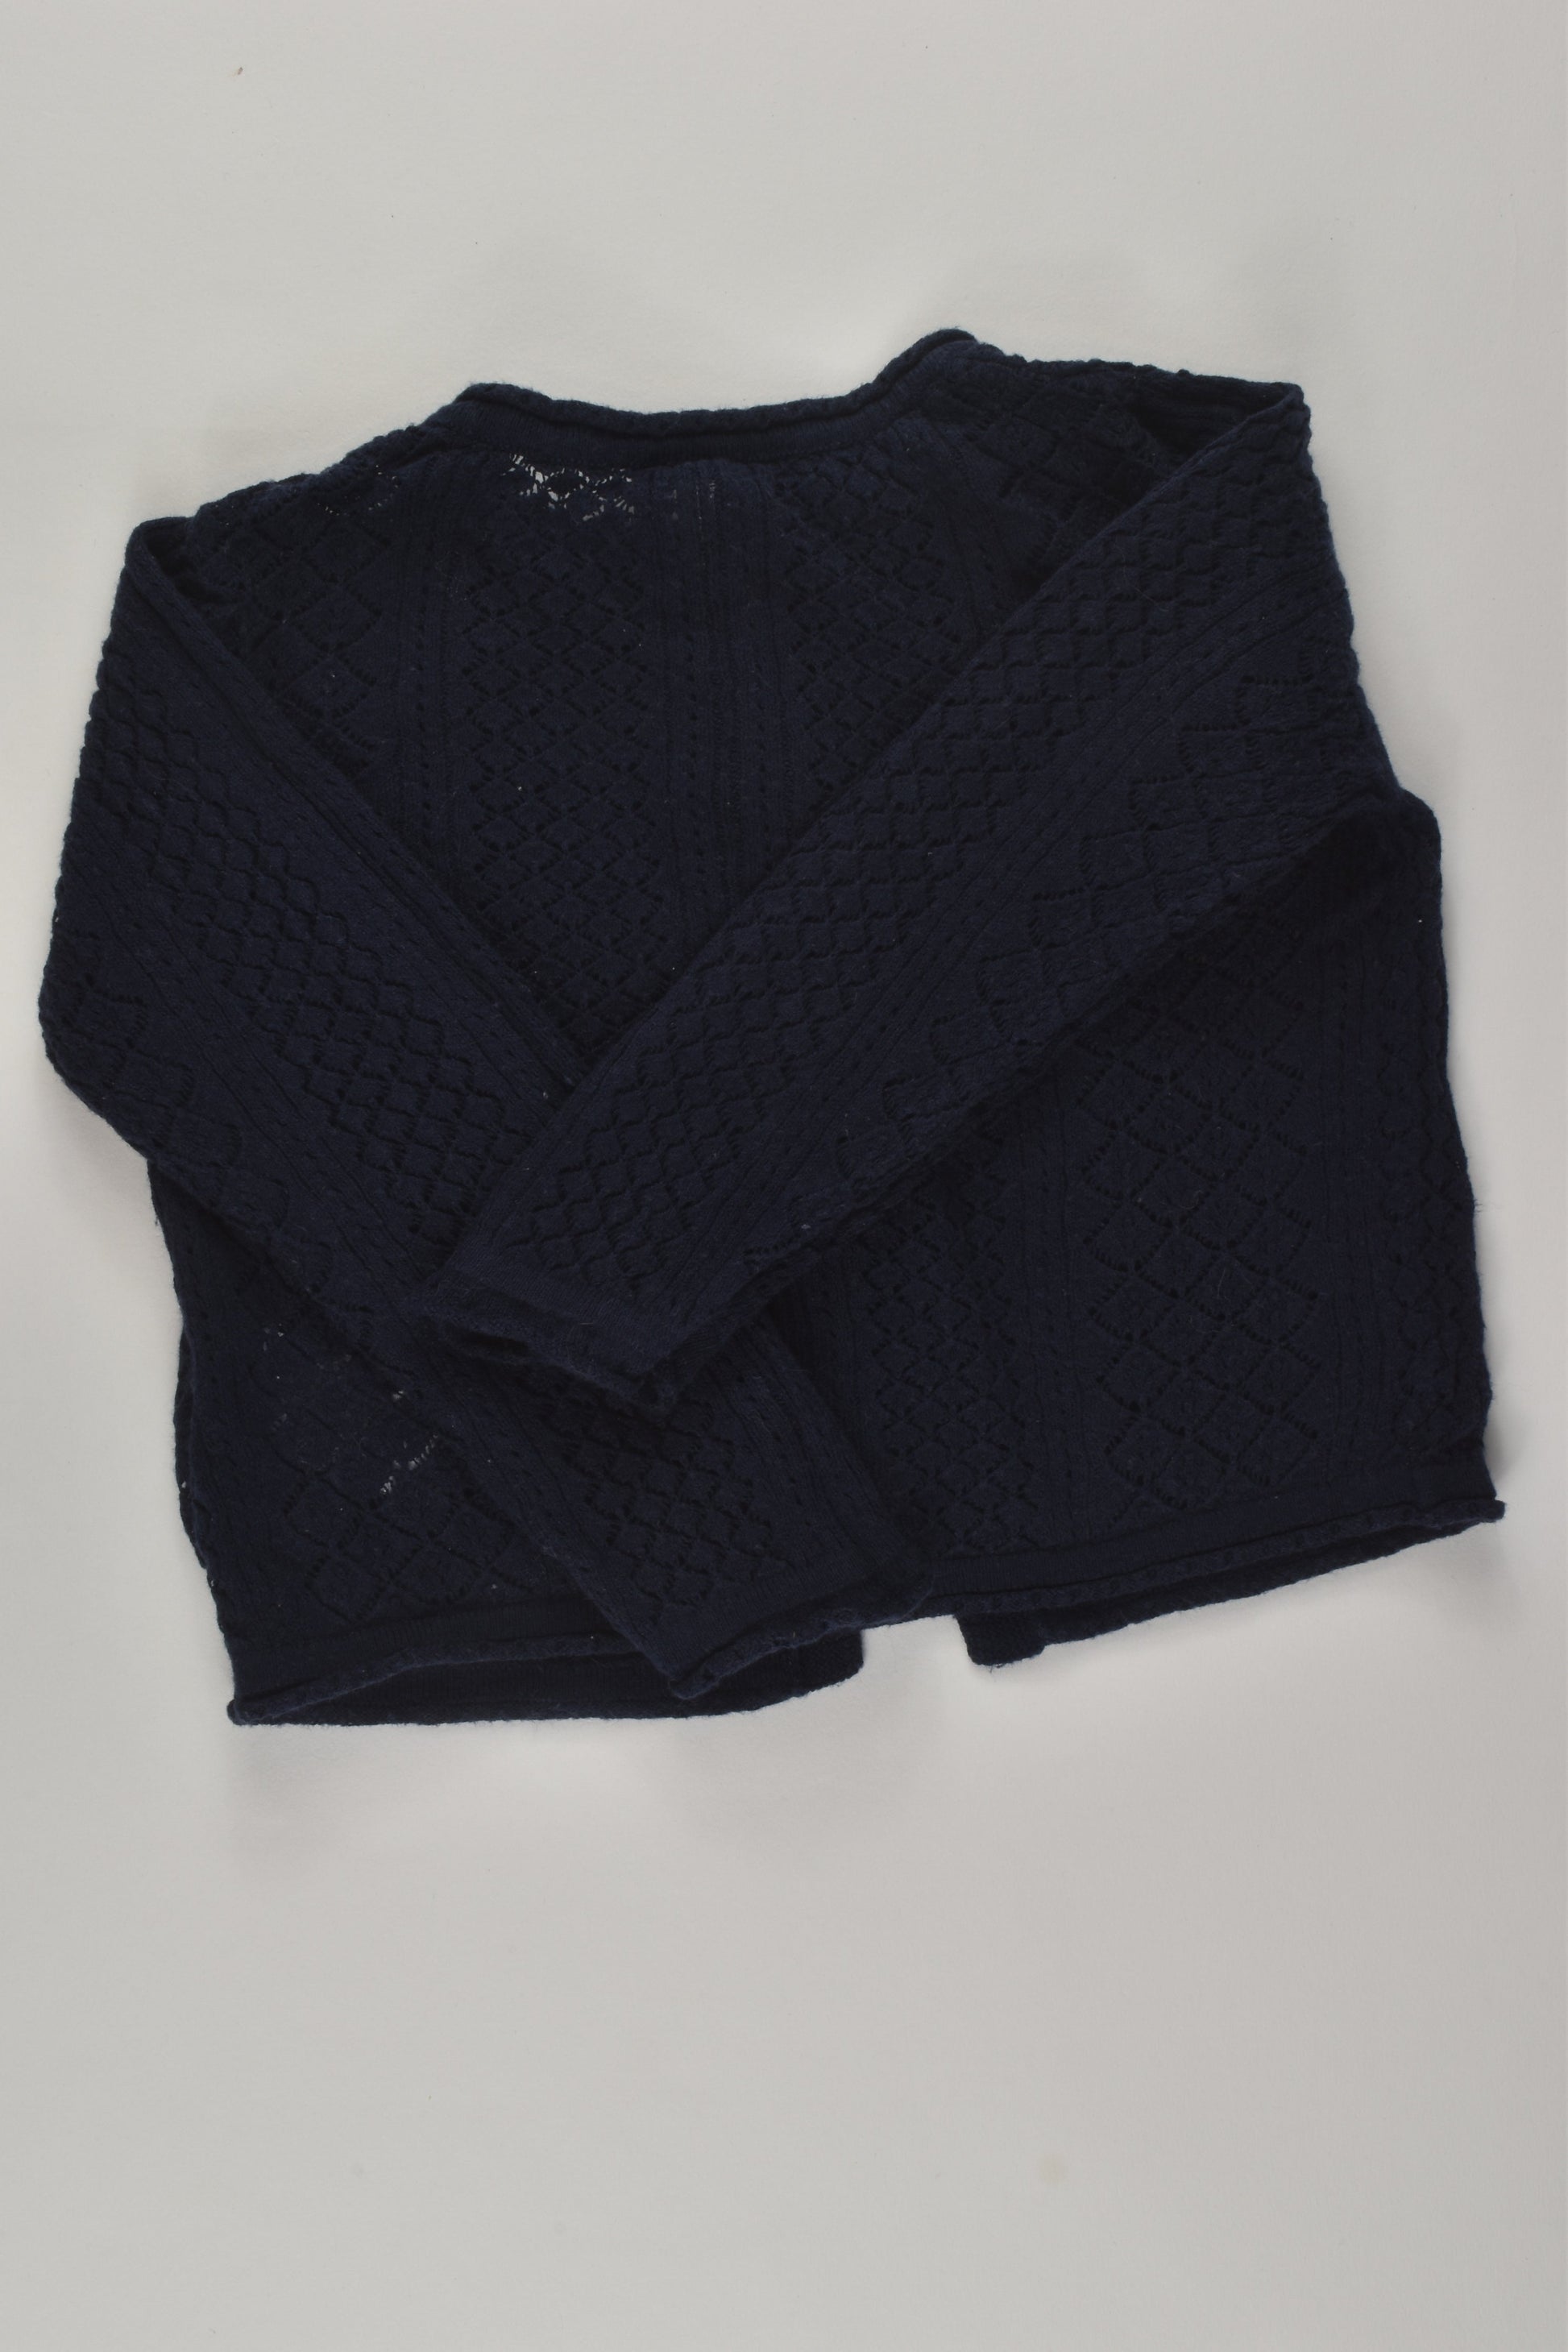 Next Size 0 Navy Knit Cardigan